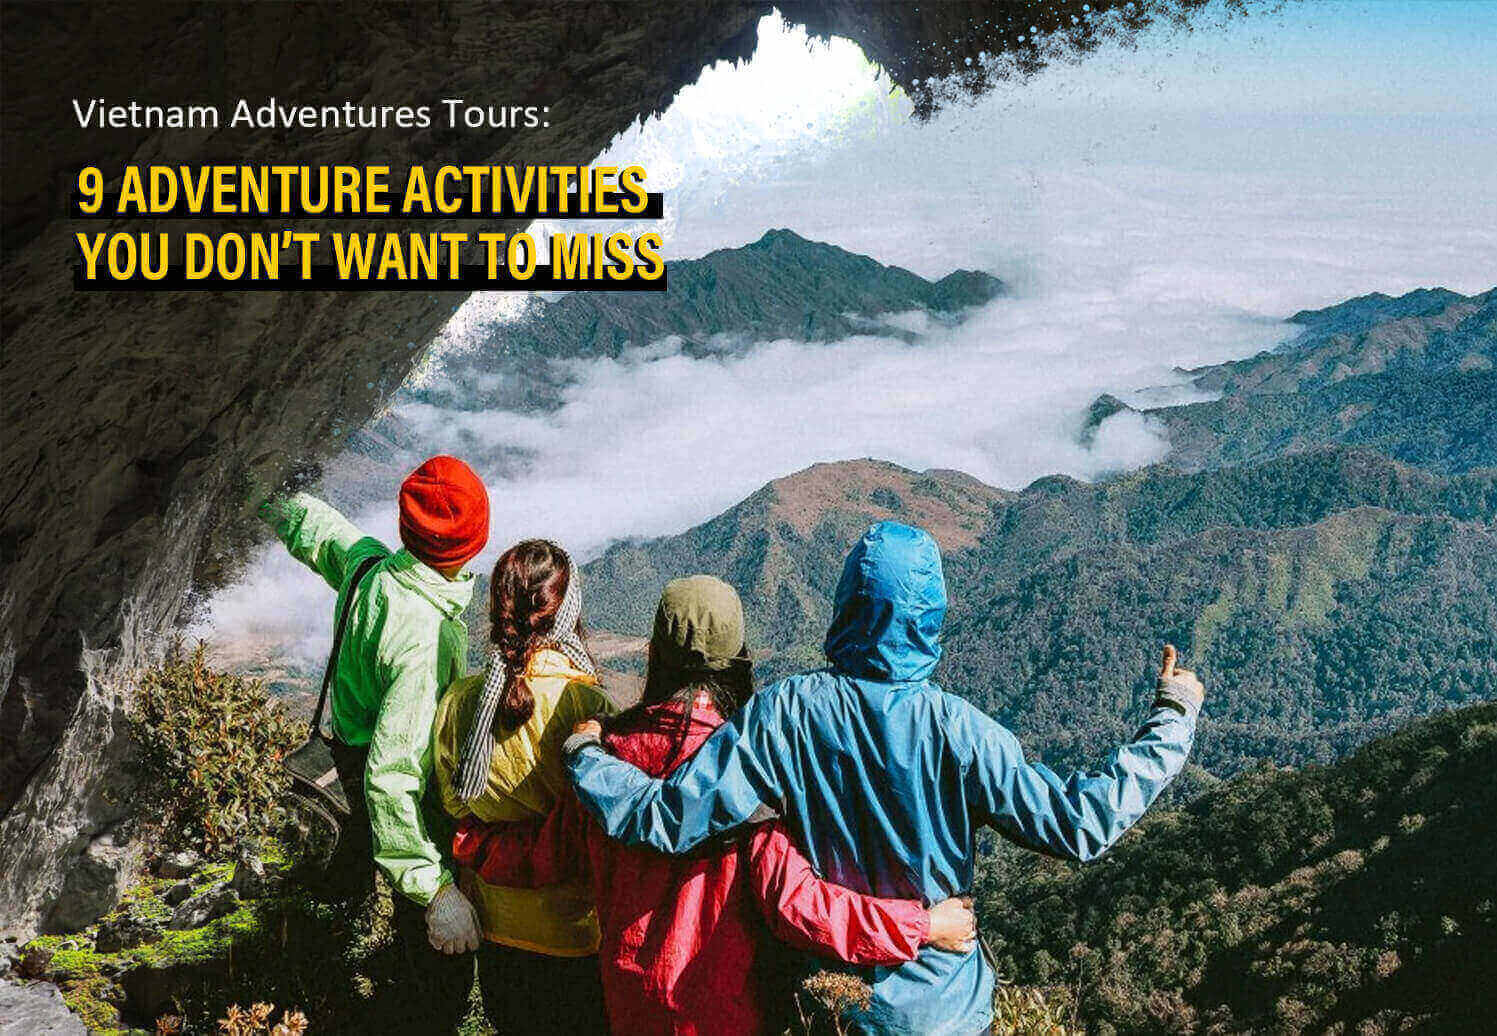 Vietnam Adventures Tours: 9 Adventurous Activities You Don’t Want To Miss